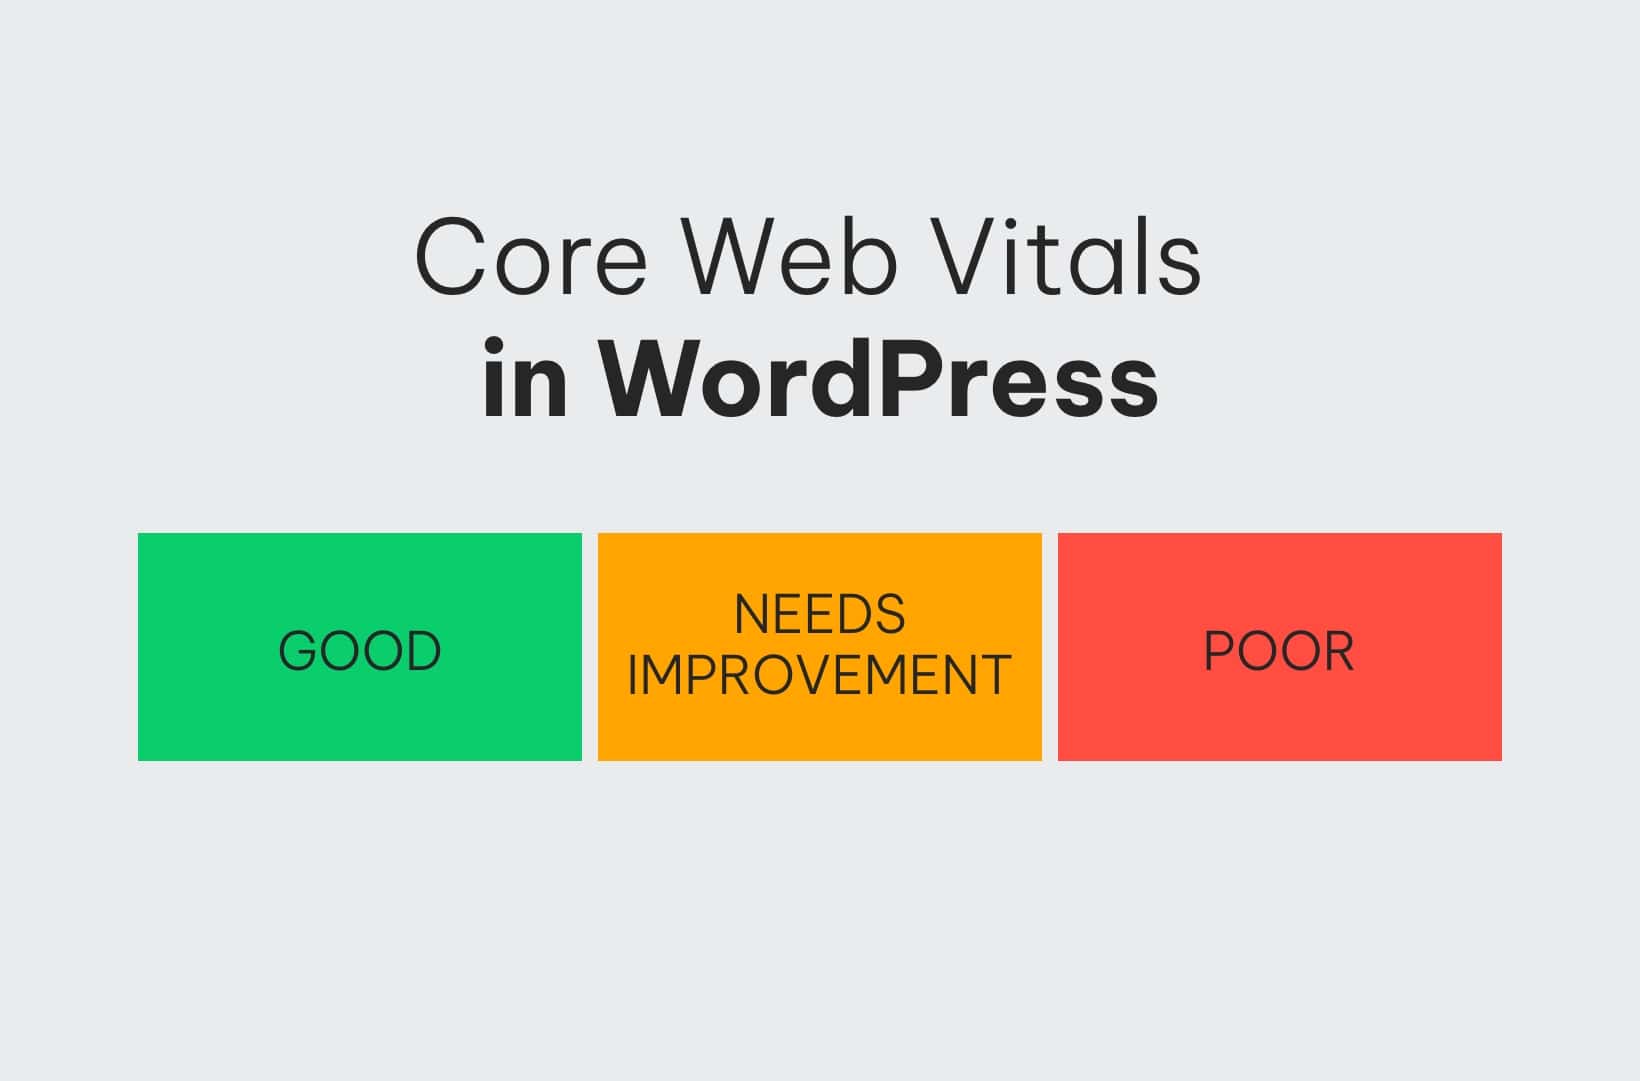 The Ultimate Guide to Core Web Vitals in WordPress